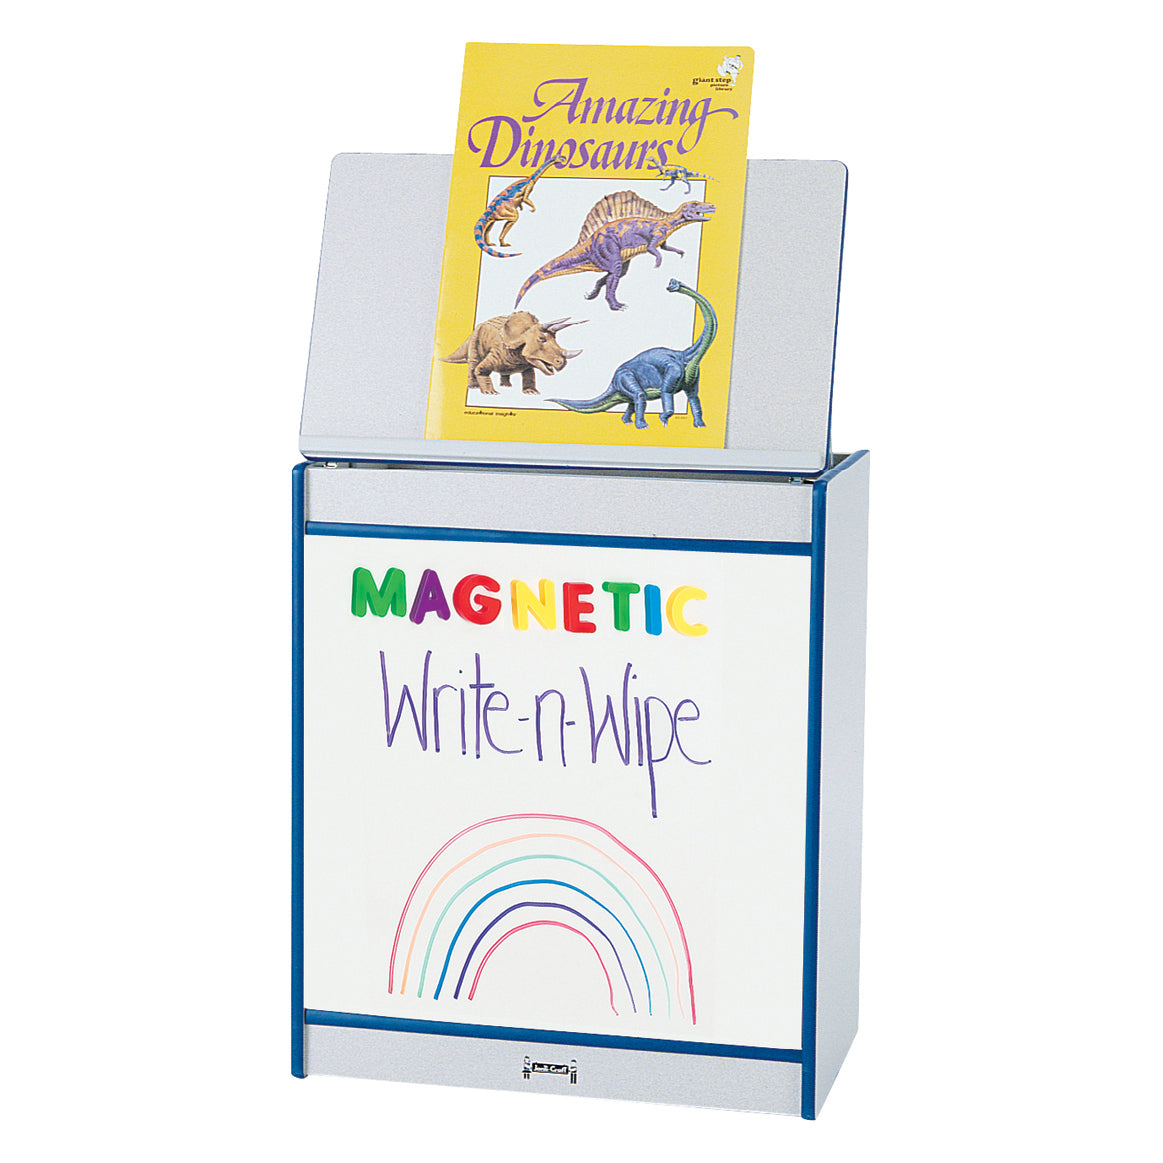 0543JCMG003, Rainbow Accents Big Book Easel - Magnetic Write-n-Wipe - Blue